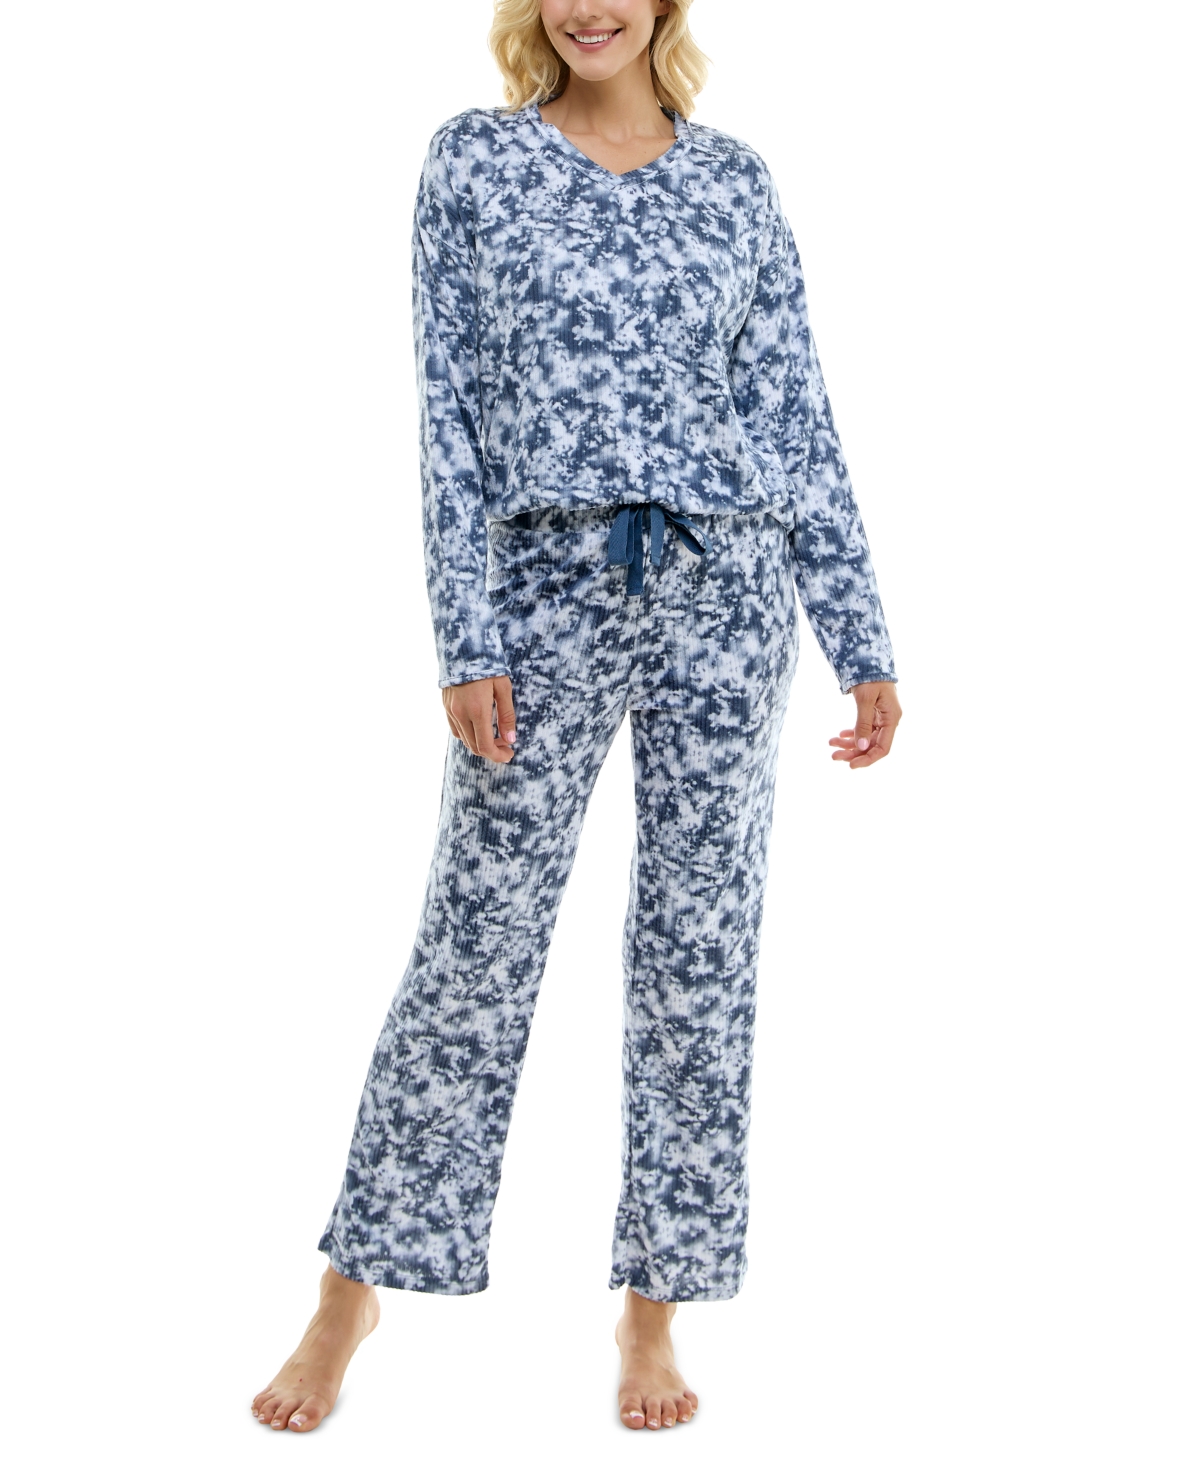 Women's 2-Pc. Whisperluxe Printed Pajamas Set - Ariel Tie Dye